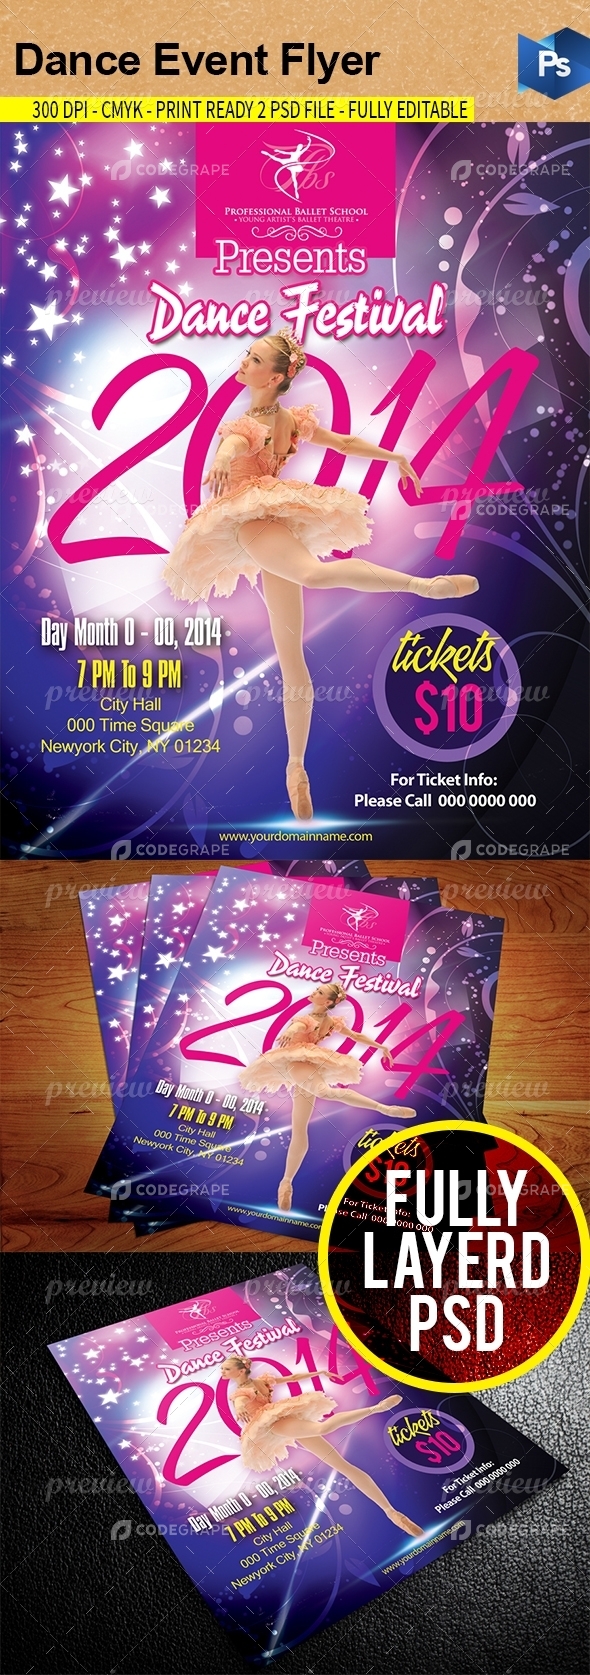 Dance Event Flyer